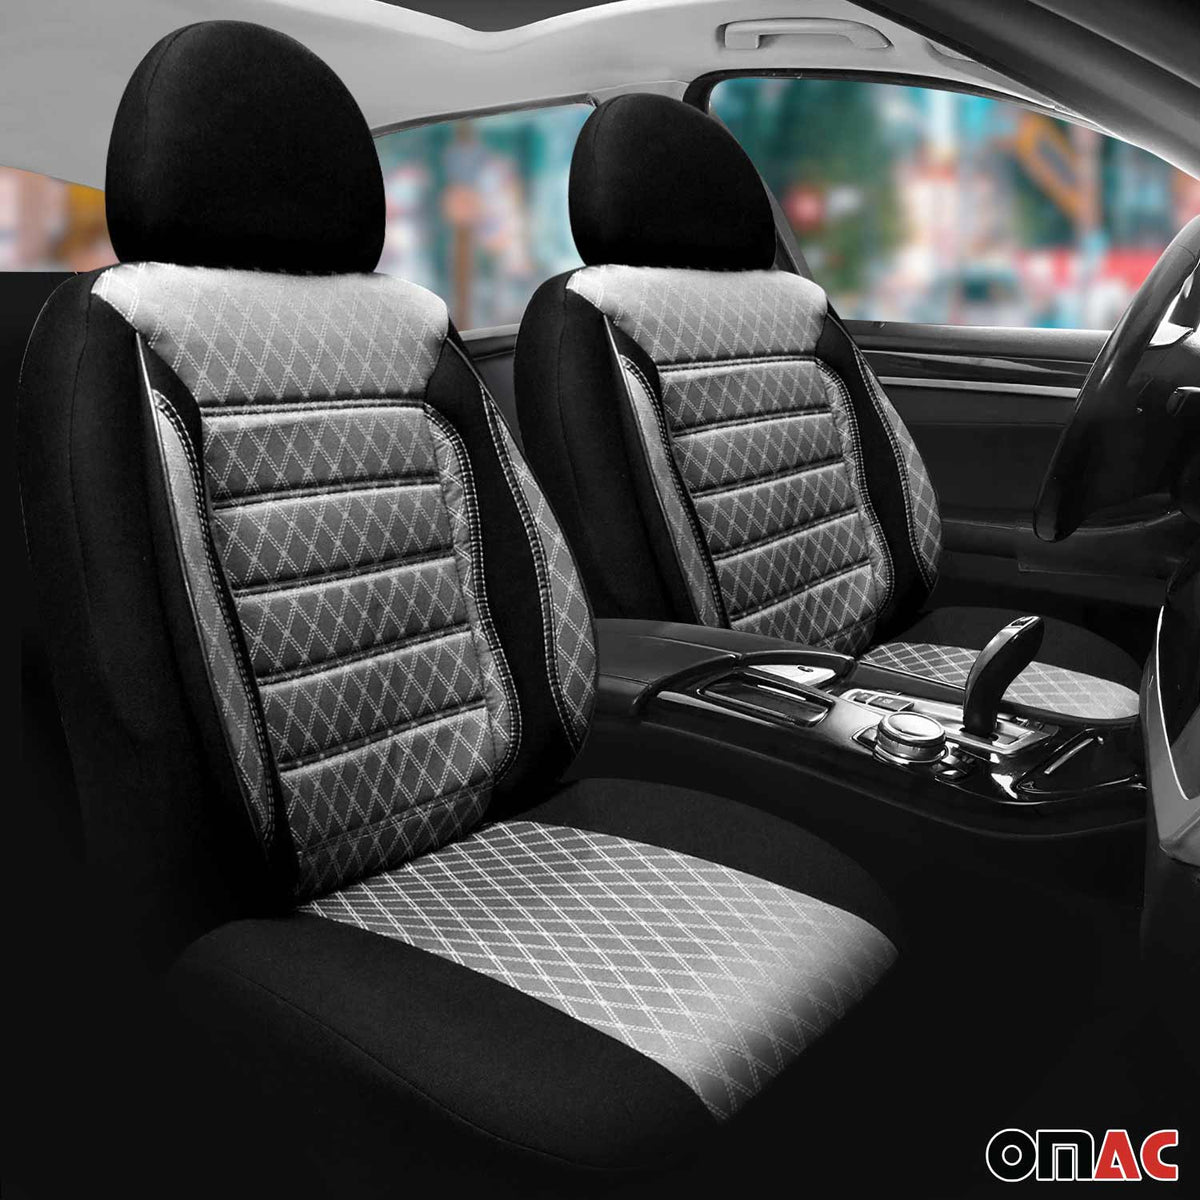 Seat covers protective covers for Alfa Romeo Giulia Giulietta gray black 2 seats front